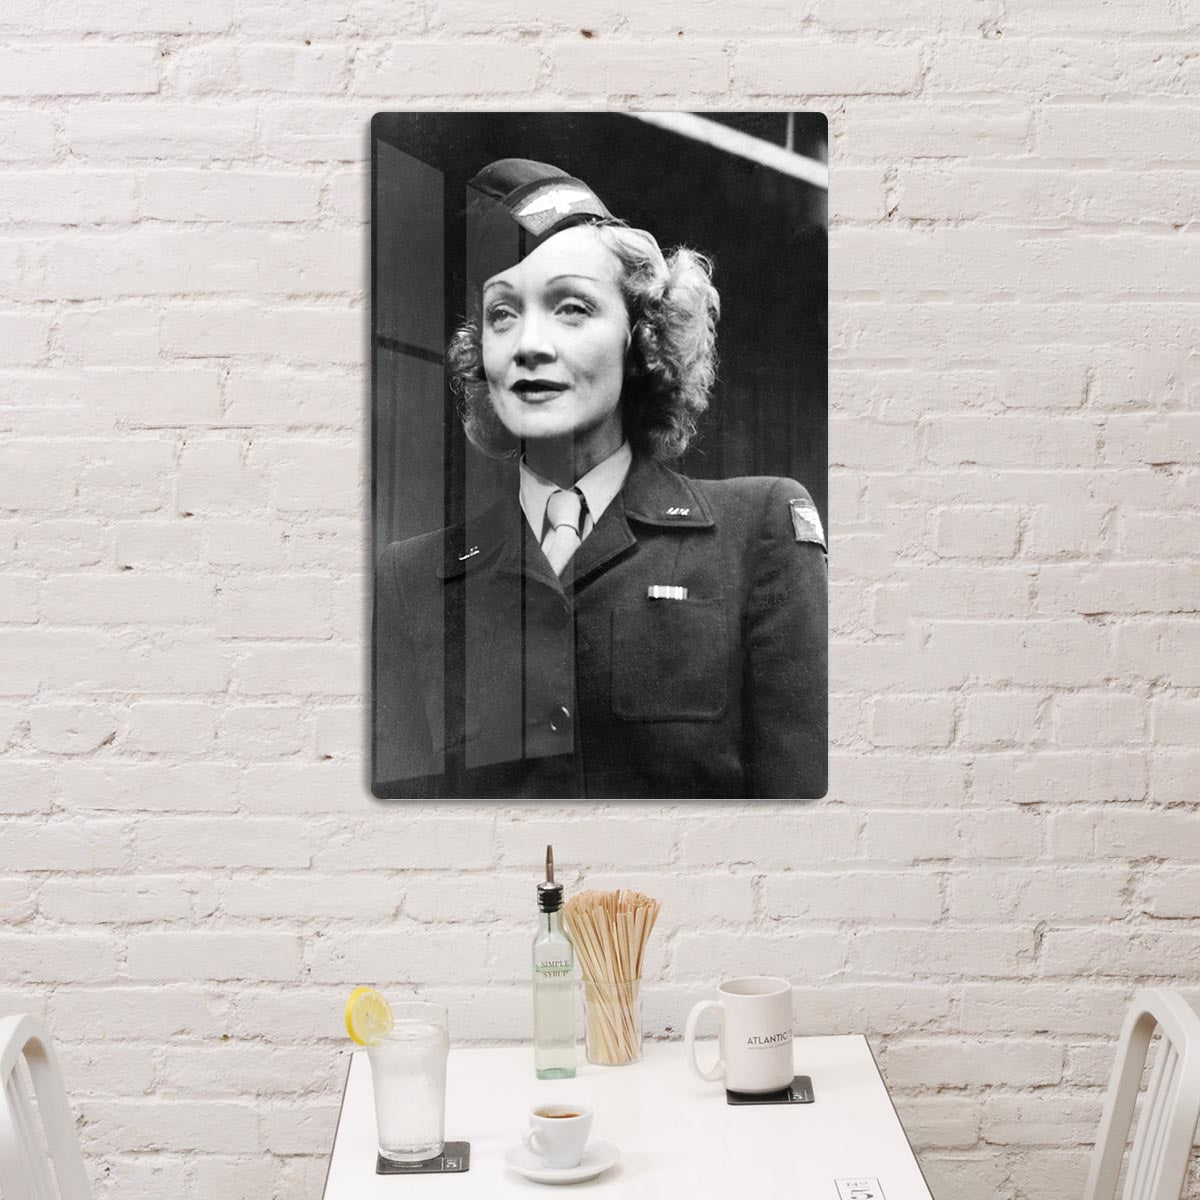 Marlene Dietrich in uniform HD Metal Print